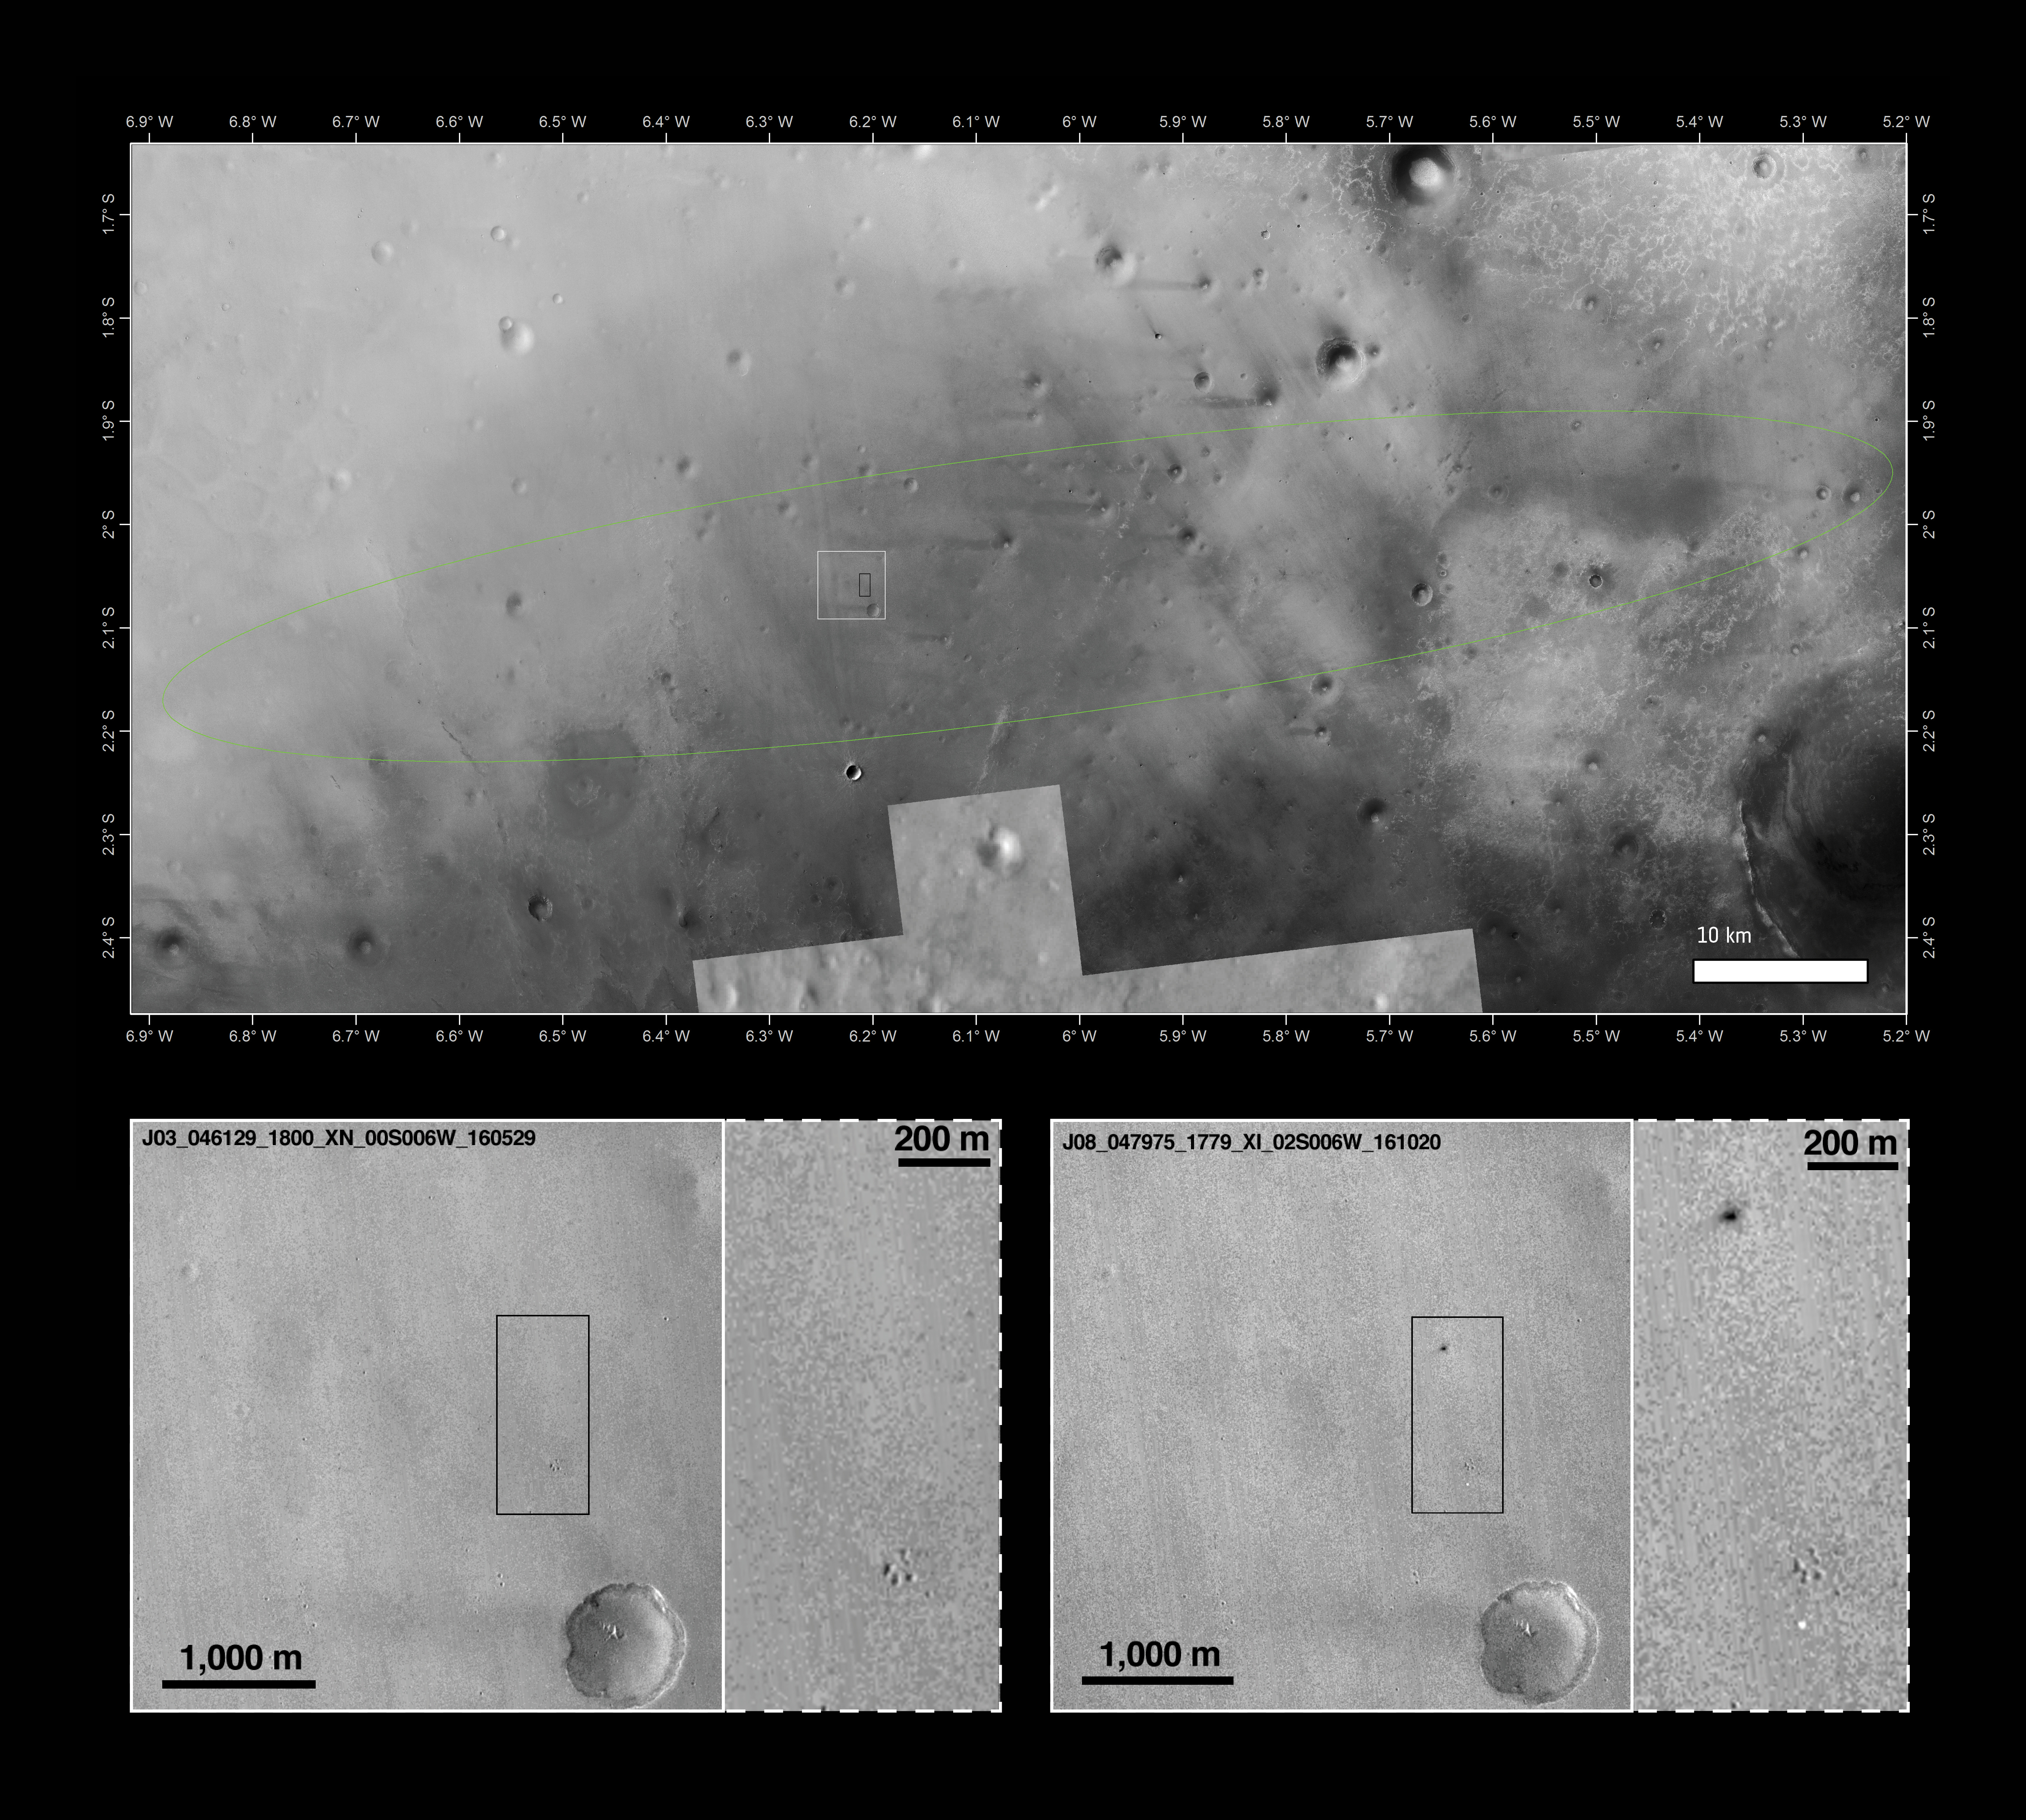 Aufnahmen der Schiaparelli-Aufschlagsstelle, Quelle: Main image: NASA/JPL-Caltech/MSSS, Arizona State University; inserts: NASA/JPL-Caltech/MSSS